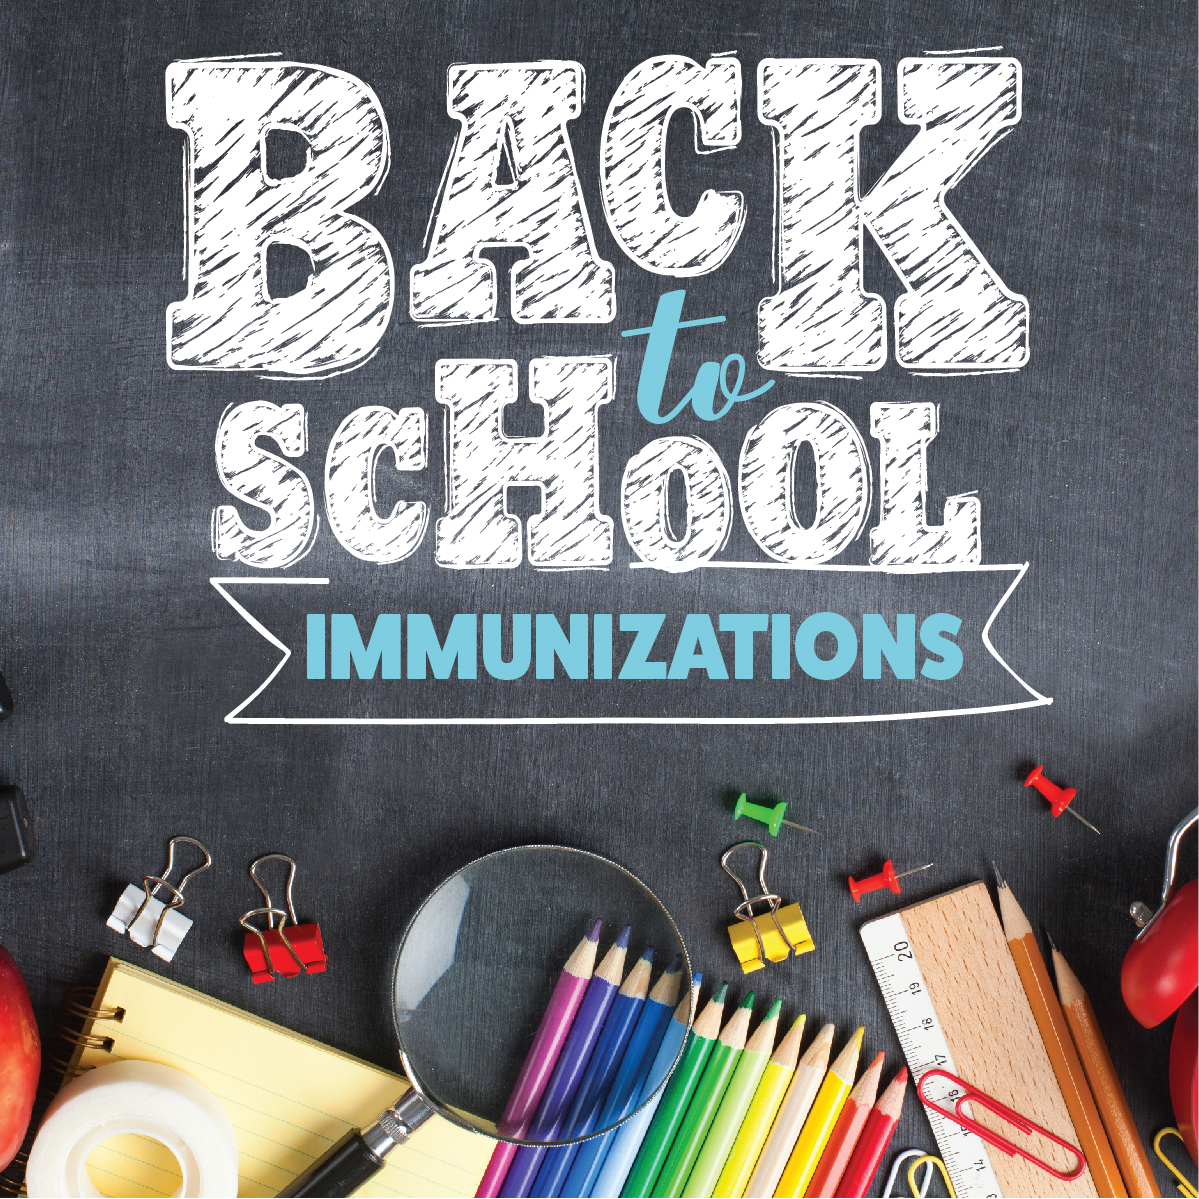 Schedule kids’ back-to-school immunizations today